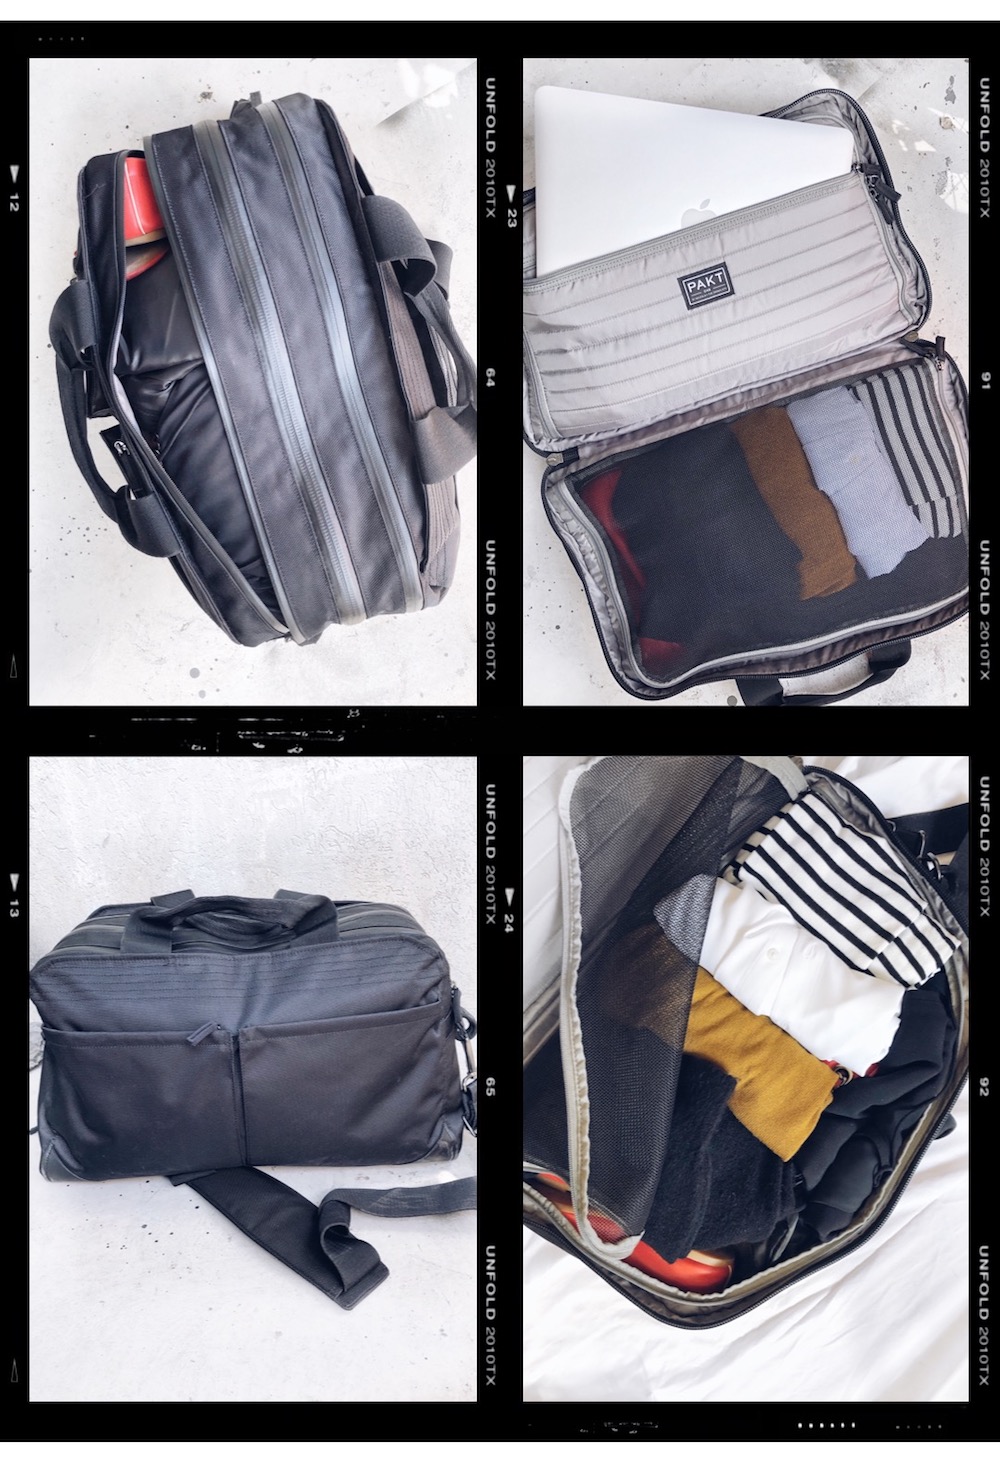 Pakt One Travel Bag | Pakt On Carry-on | Pakt One Review | Packing List | Packing Light | Fall Travel Capsule | Fall Capsule Wardrobe | livelovesara